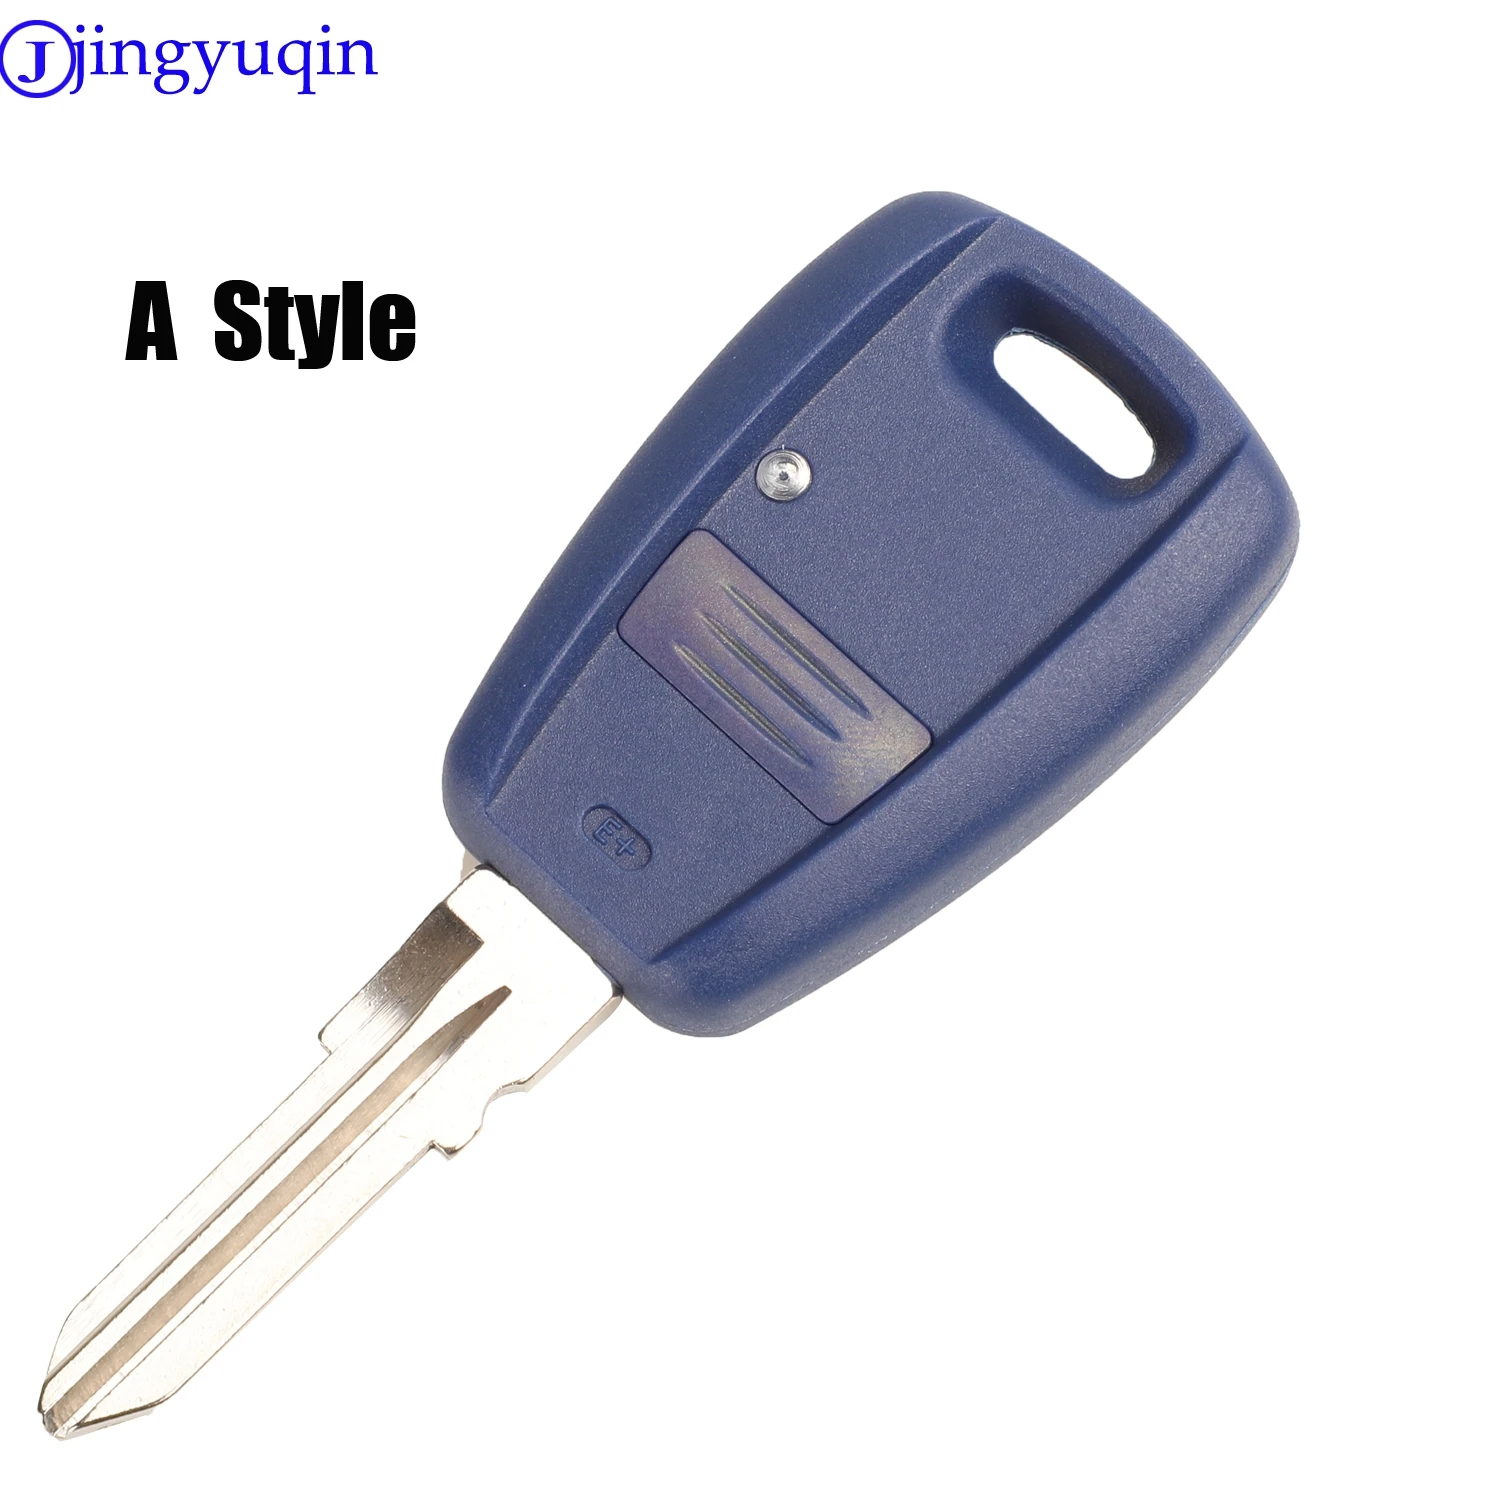 Jingyuqin 10p транспондер зажигания ключи автомобиля без покрытие чипа чехол для Fiat Punto Stilo Seicento с Uncut Blade GT15R